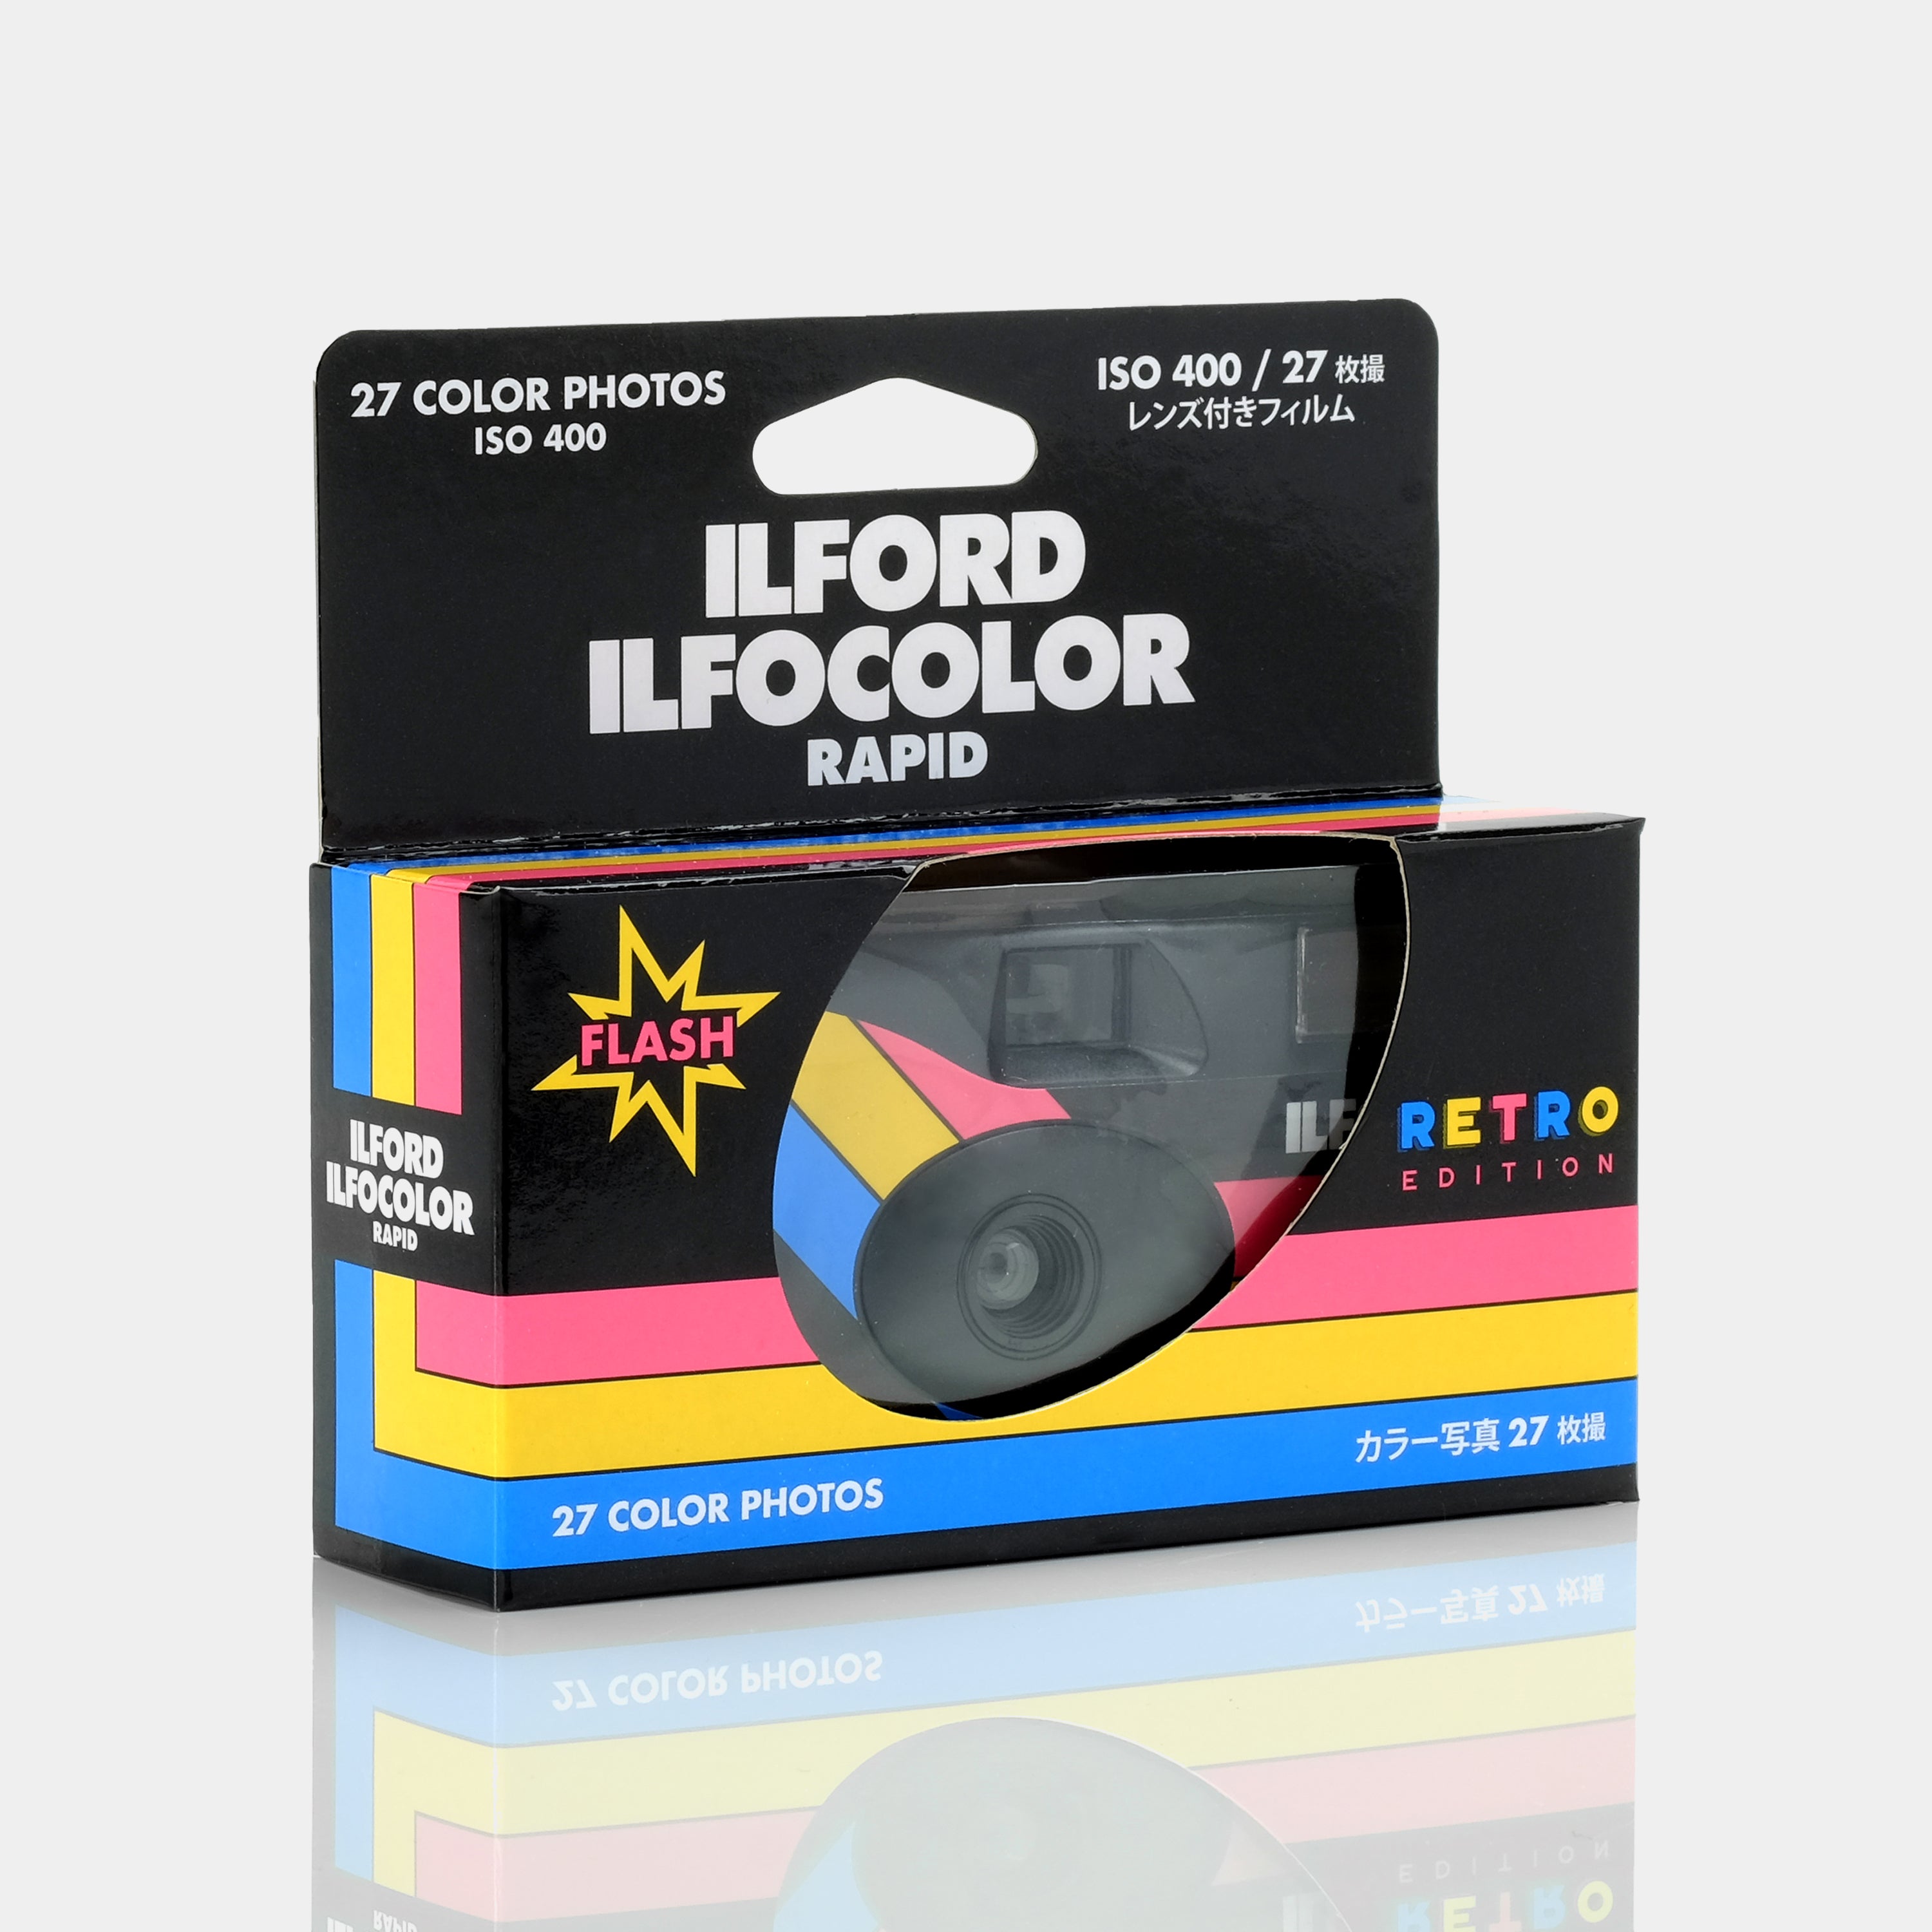 Ilford Ilfocolor Rapid Retro Edition Single Use 35mm Point and Shoot Film Camera